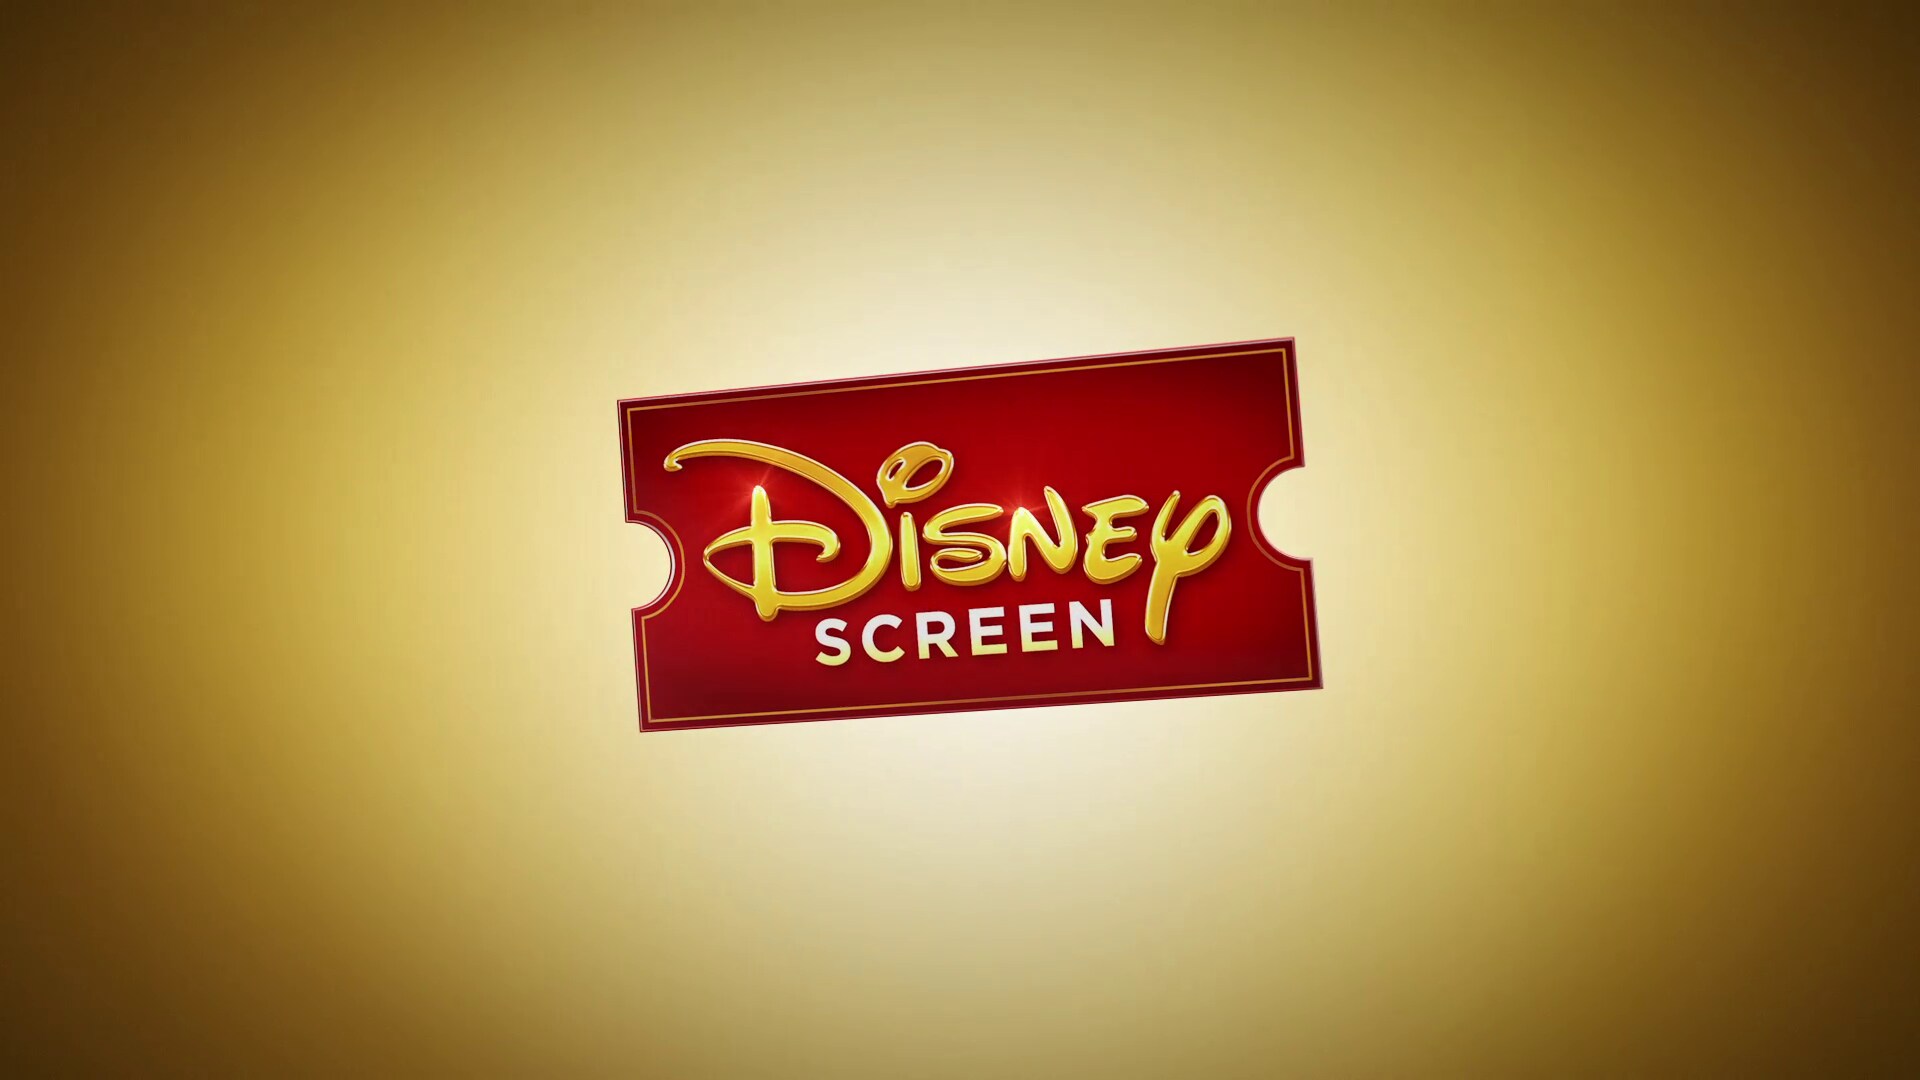 Disney Screen Trailer